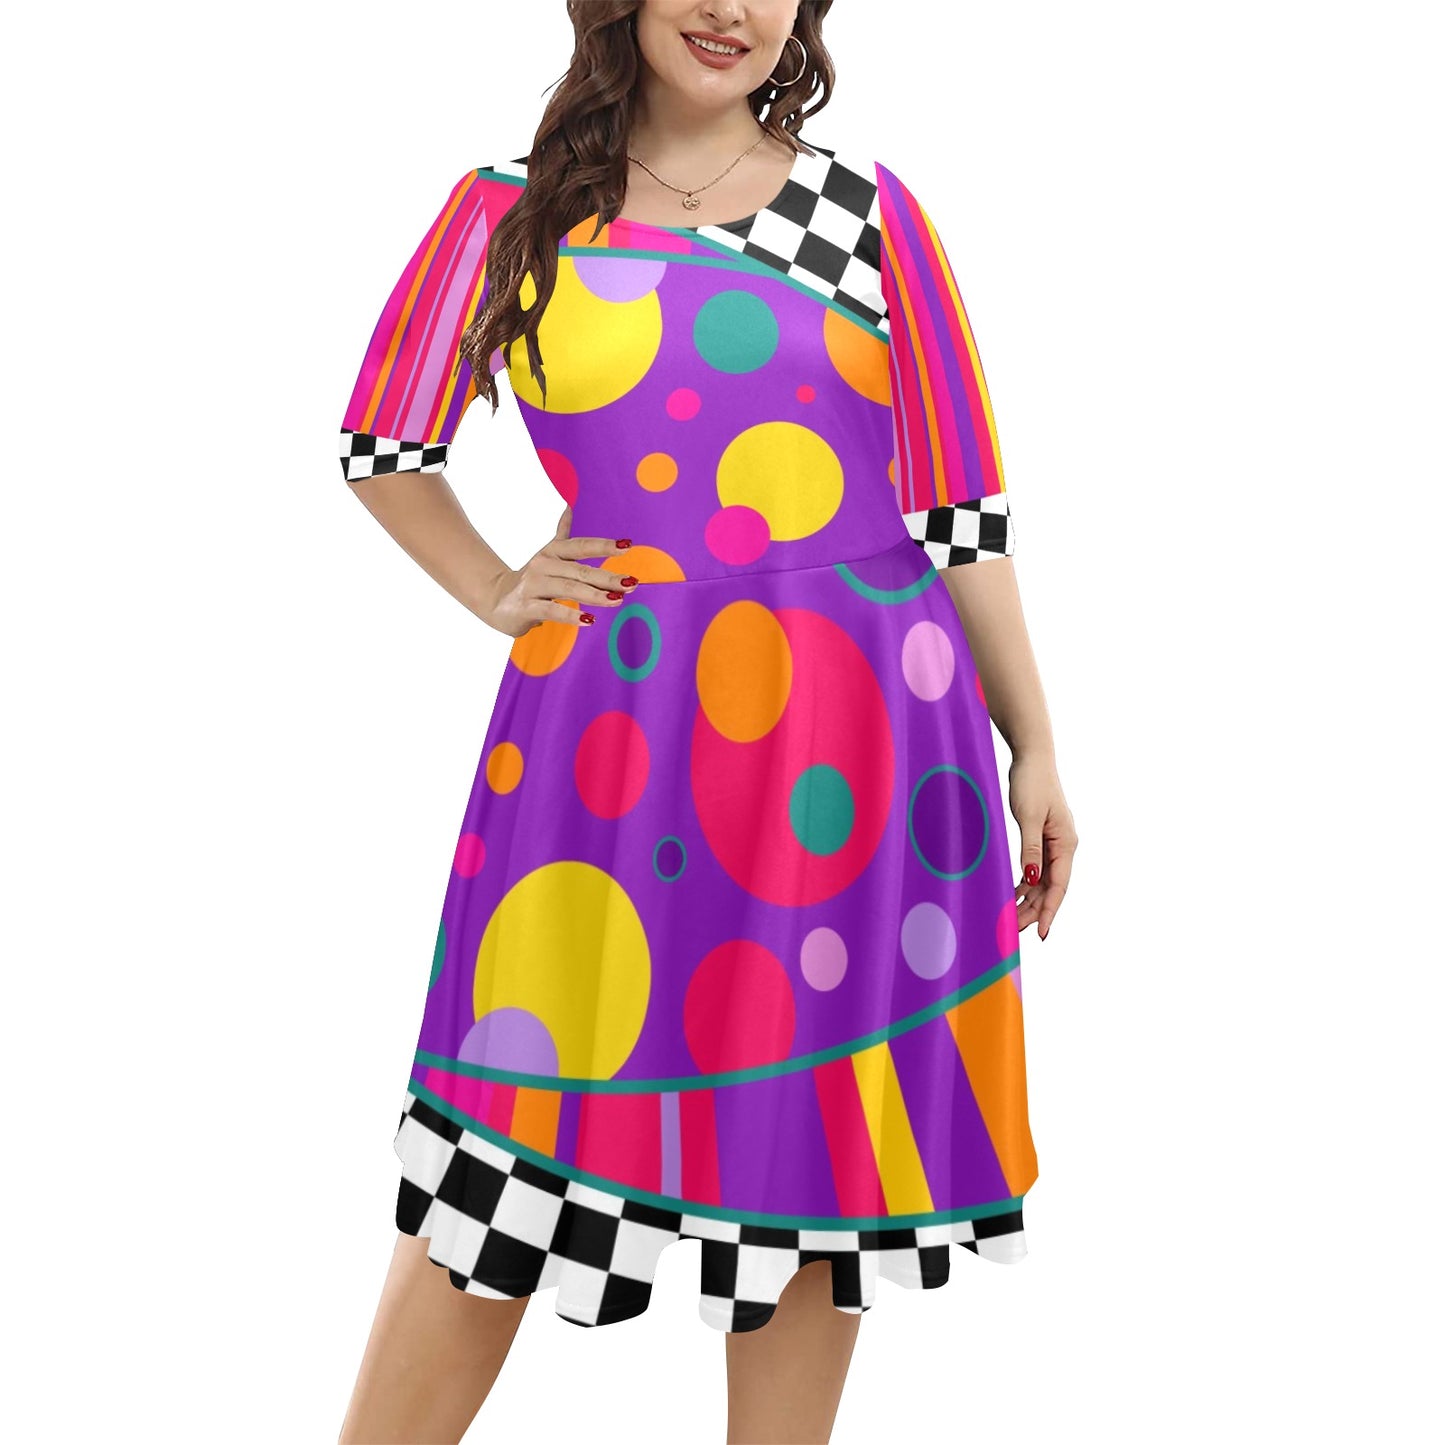 Fun Clown dress with Sleeves Clowncore